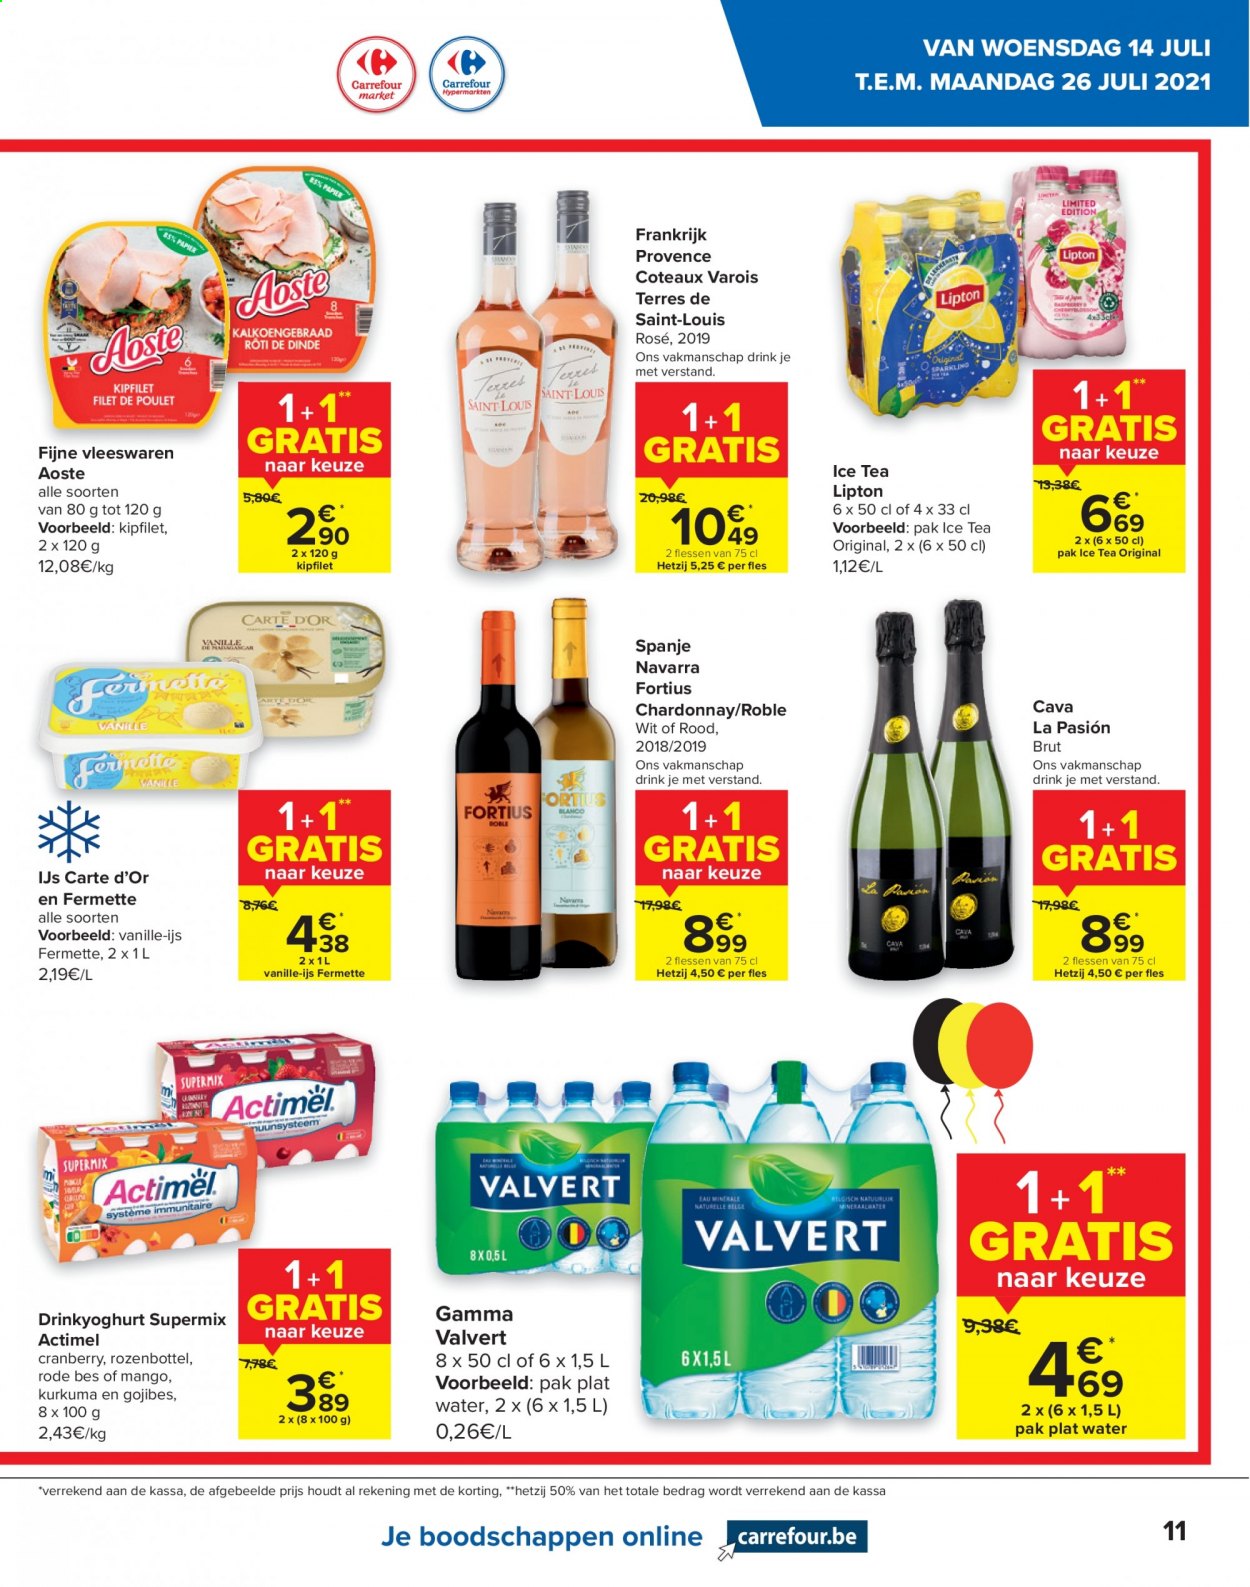 thumbnail - Carrefour-aanbieding - 14/07/2021 - 26/07/2021 -  producten in de aanbieding - Cava, Chardonnay, ice tea, kipfilet, kurkuma, thee, cranberry’s, Lipton, mango, Gamma. Pagina 11.